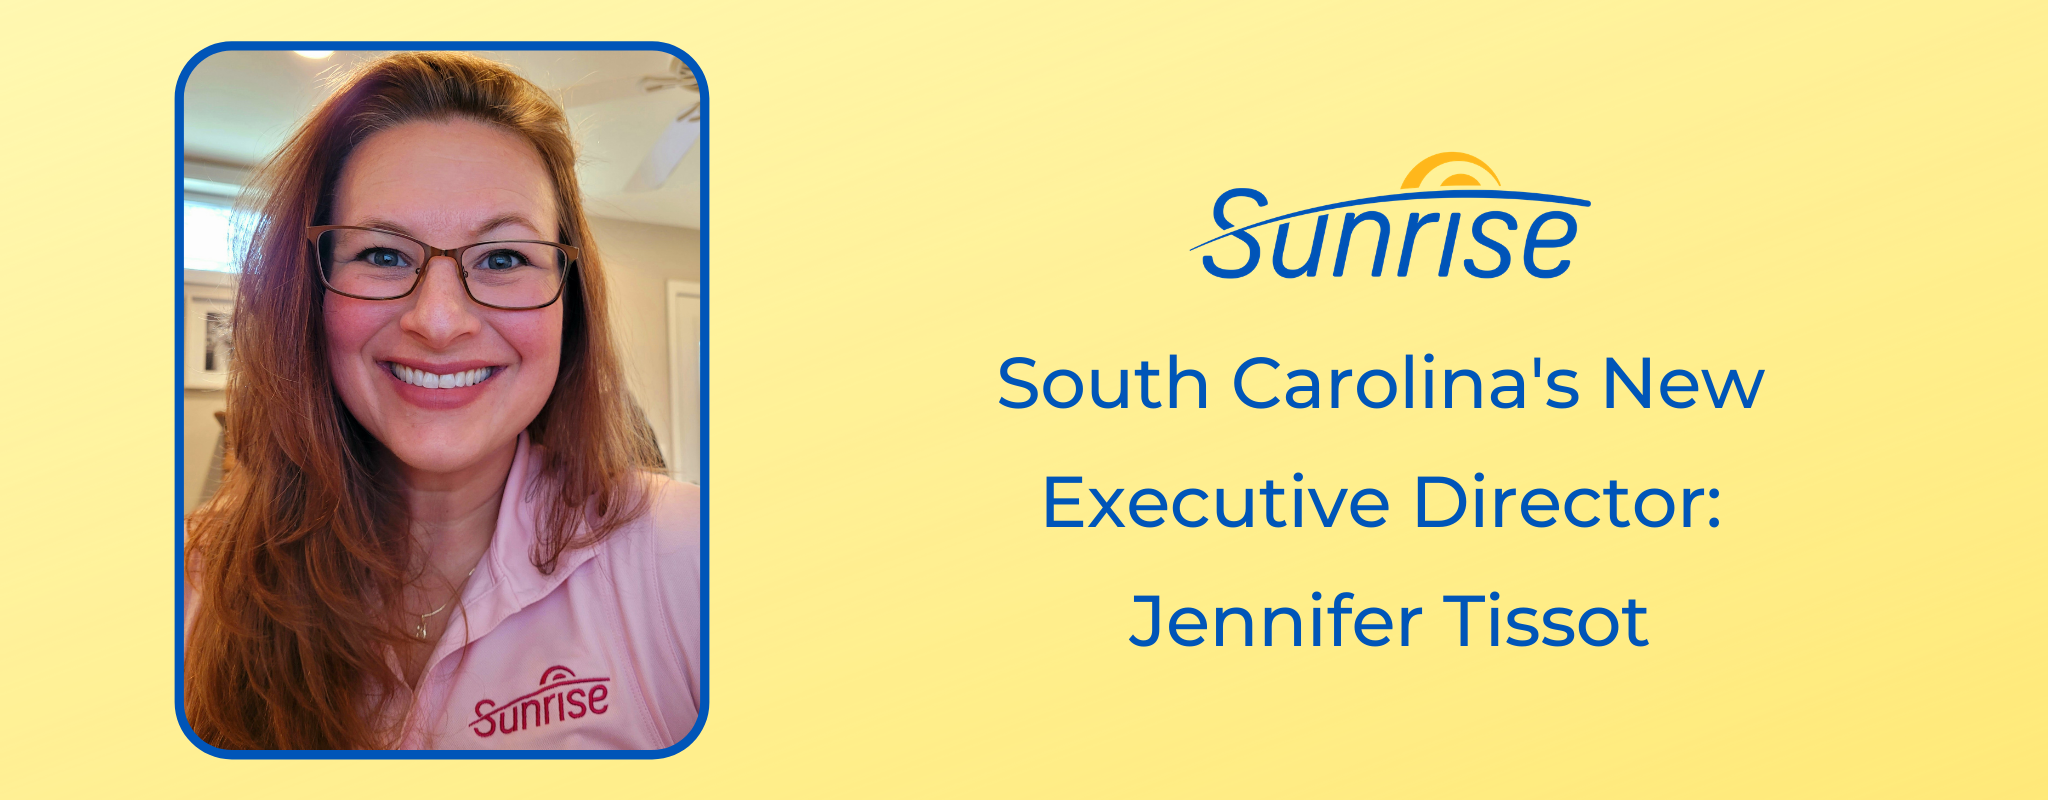 South Carolina’s New Executive Director: Jennifer Tissot